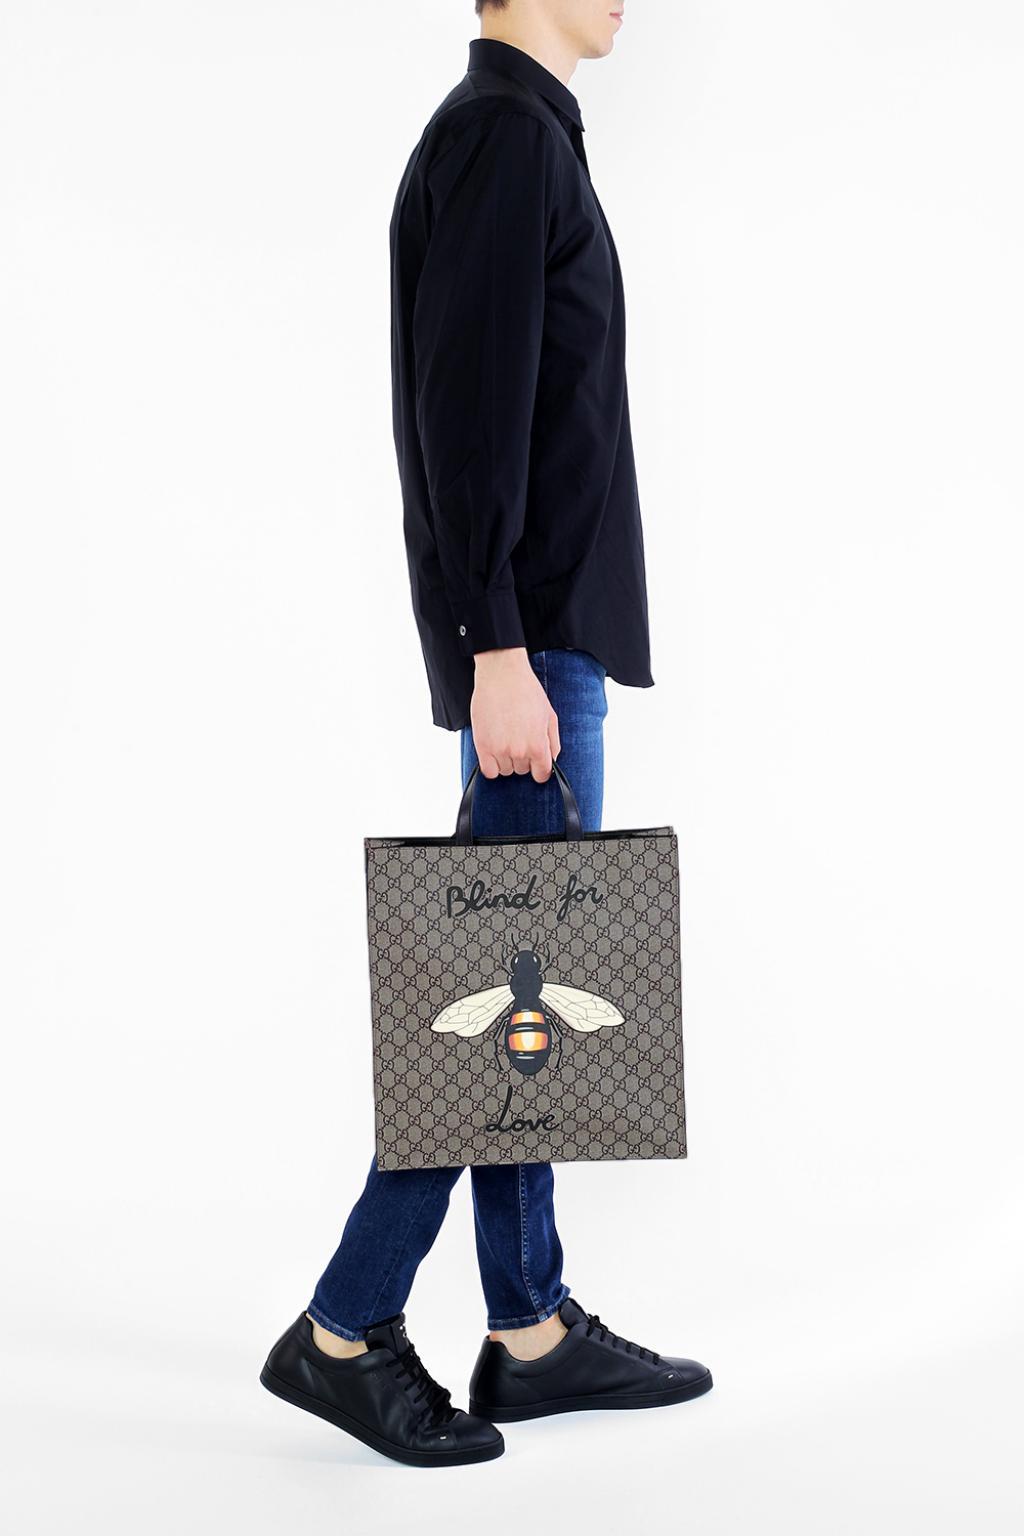 Gucci Canvas Printed Shoulder Bag in Brown for Men - Lyst